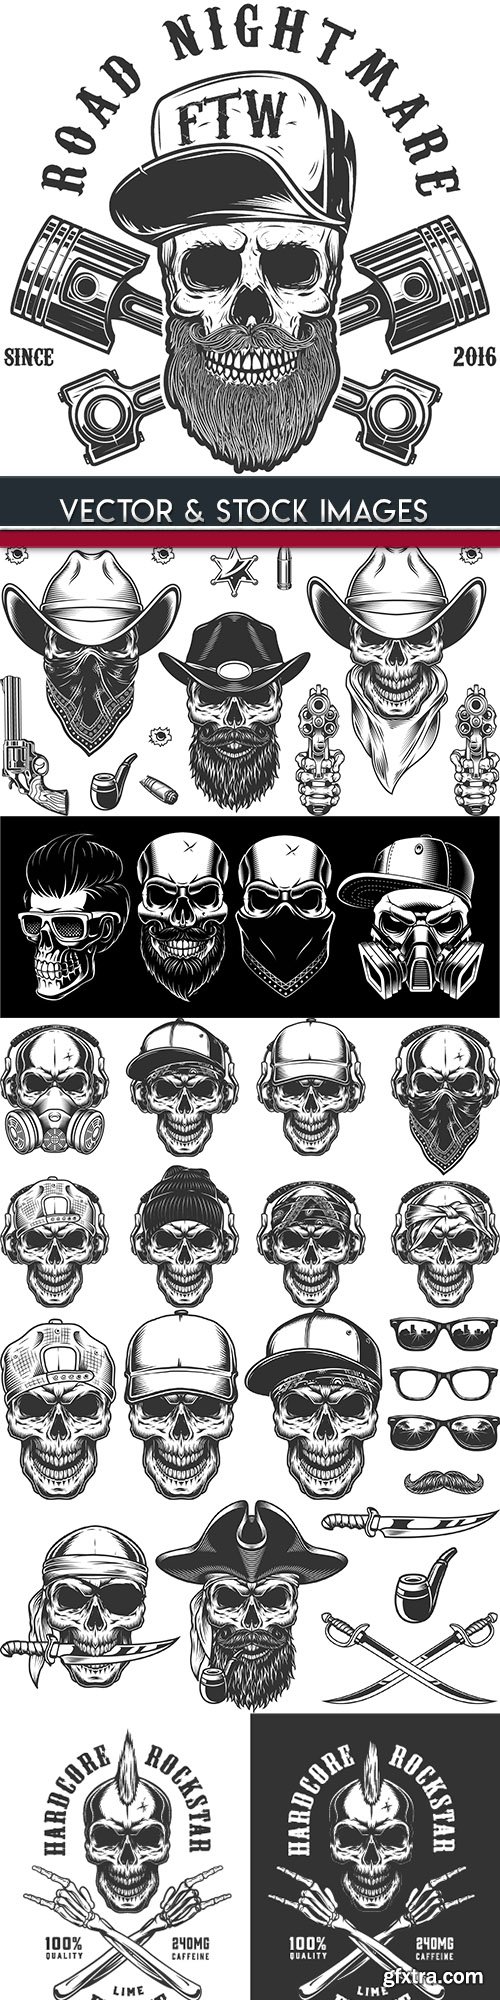 Skull and accessories grunge label drawn design 6